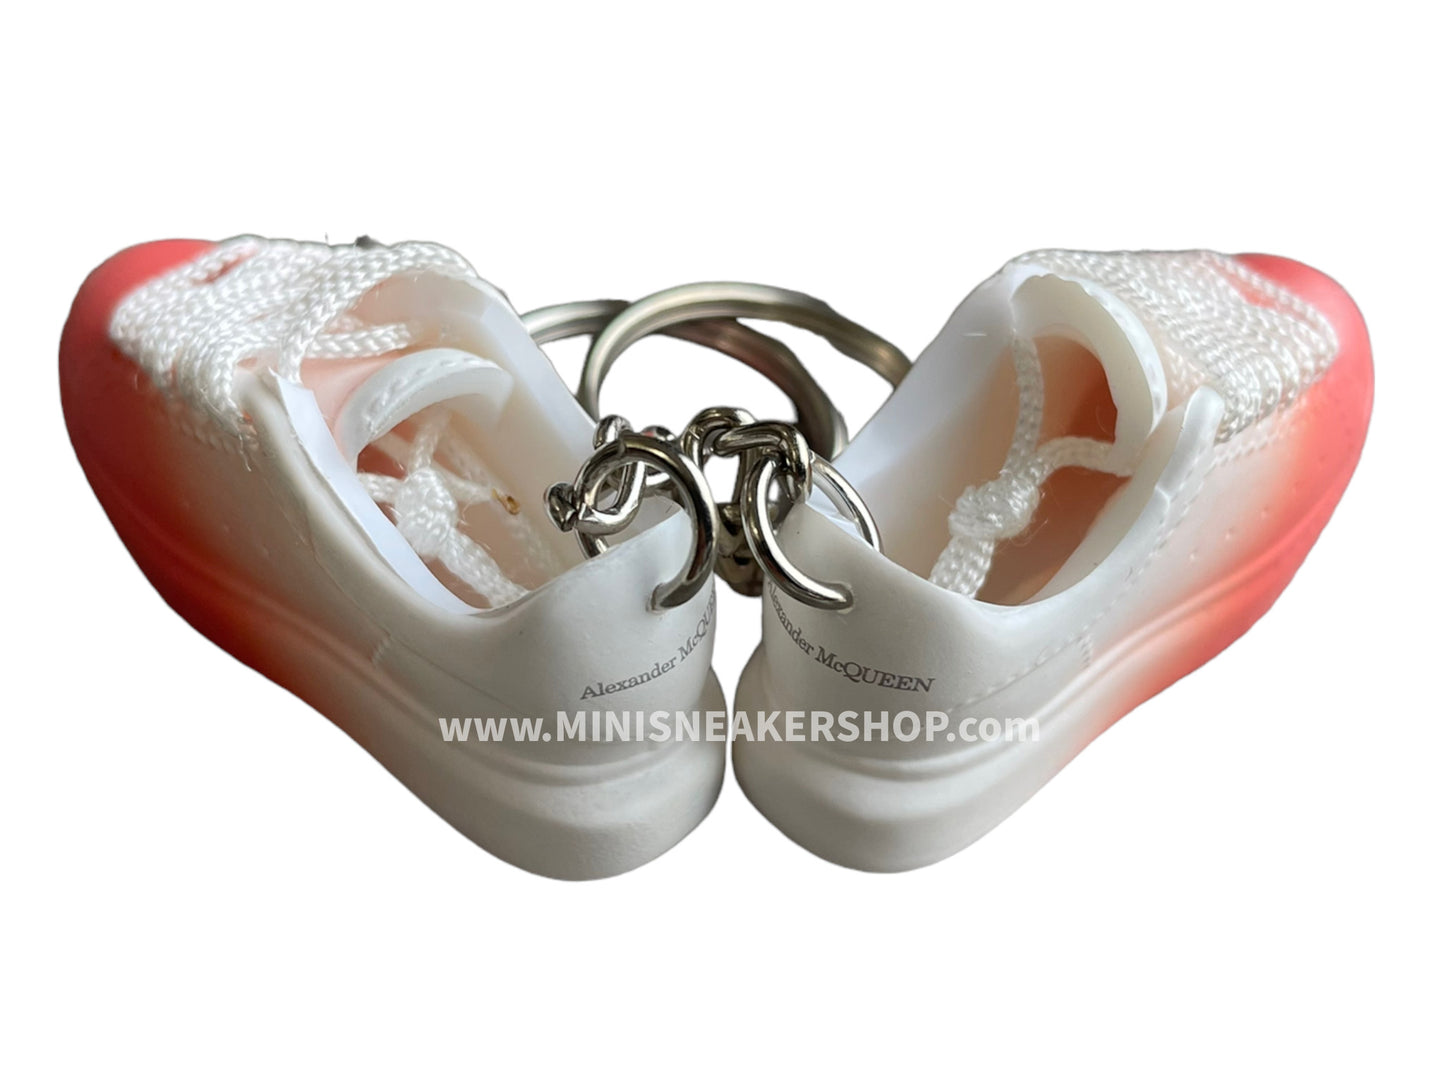 Mini sneaker keychain 3D - Alexander Mc Queen Coral fade